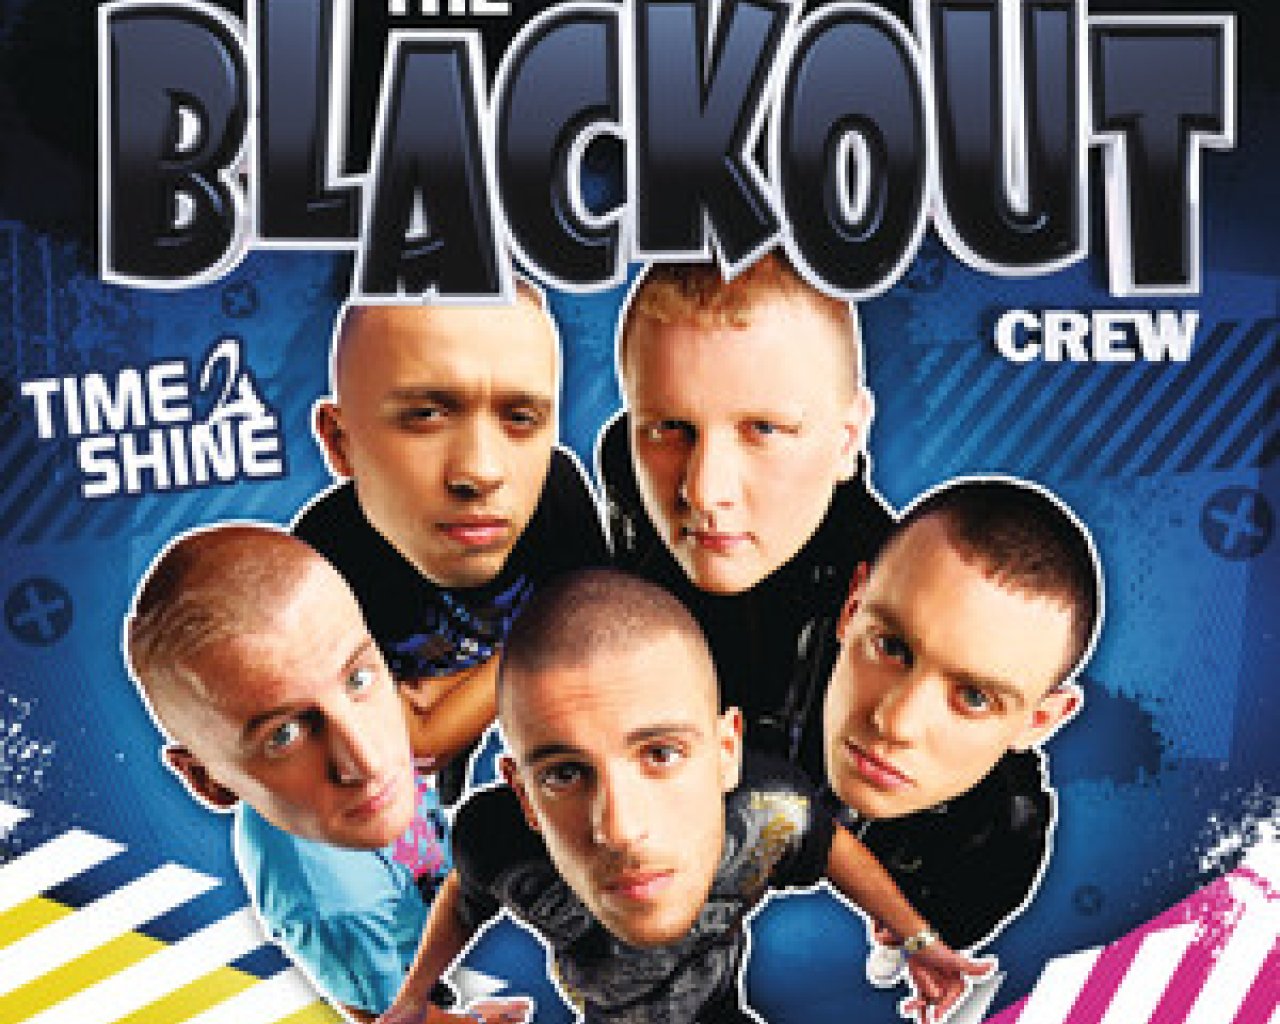 Blackout Crew